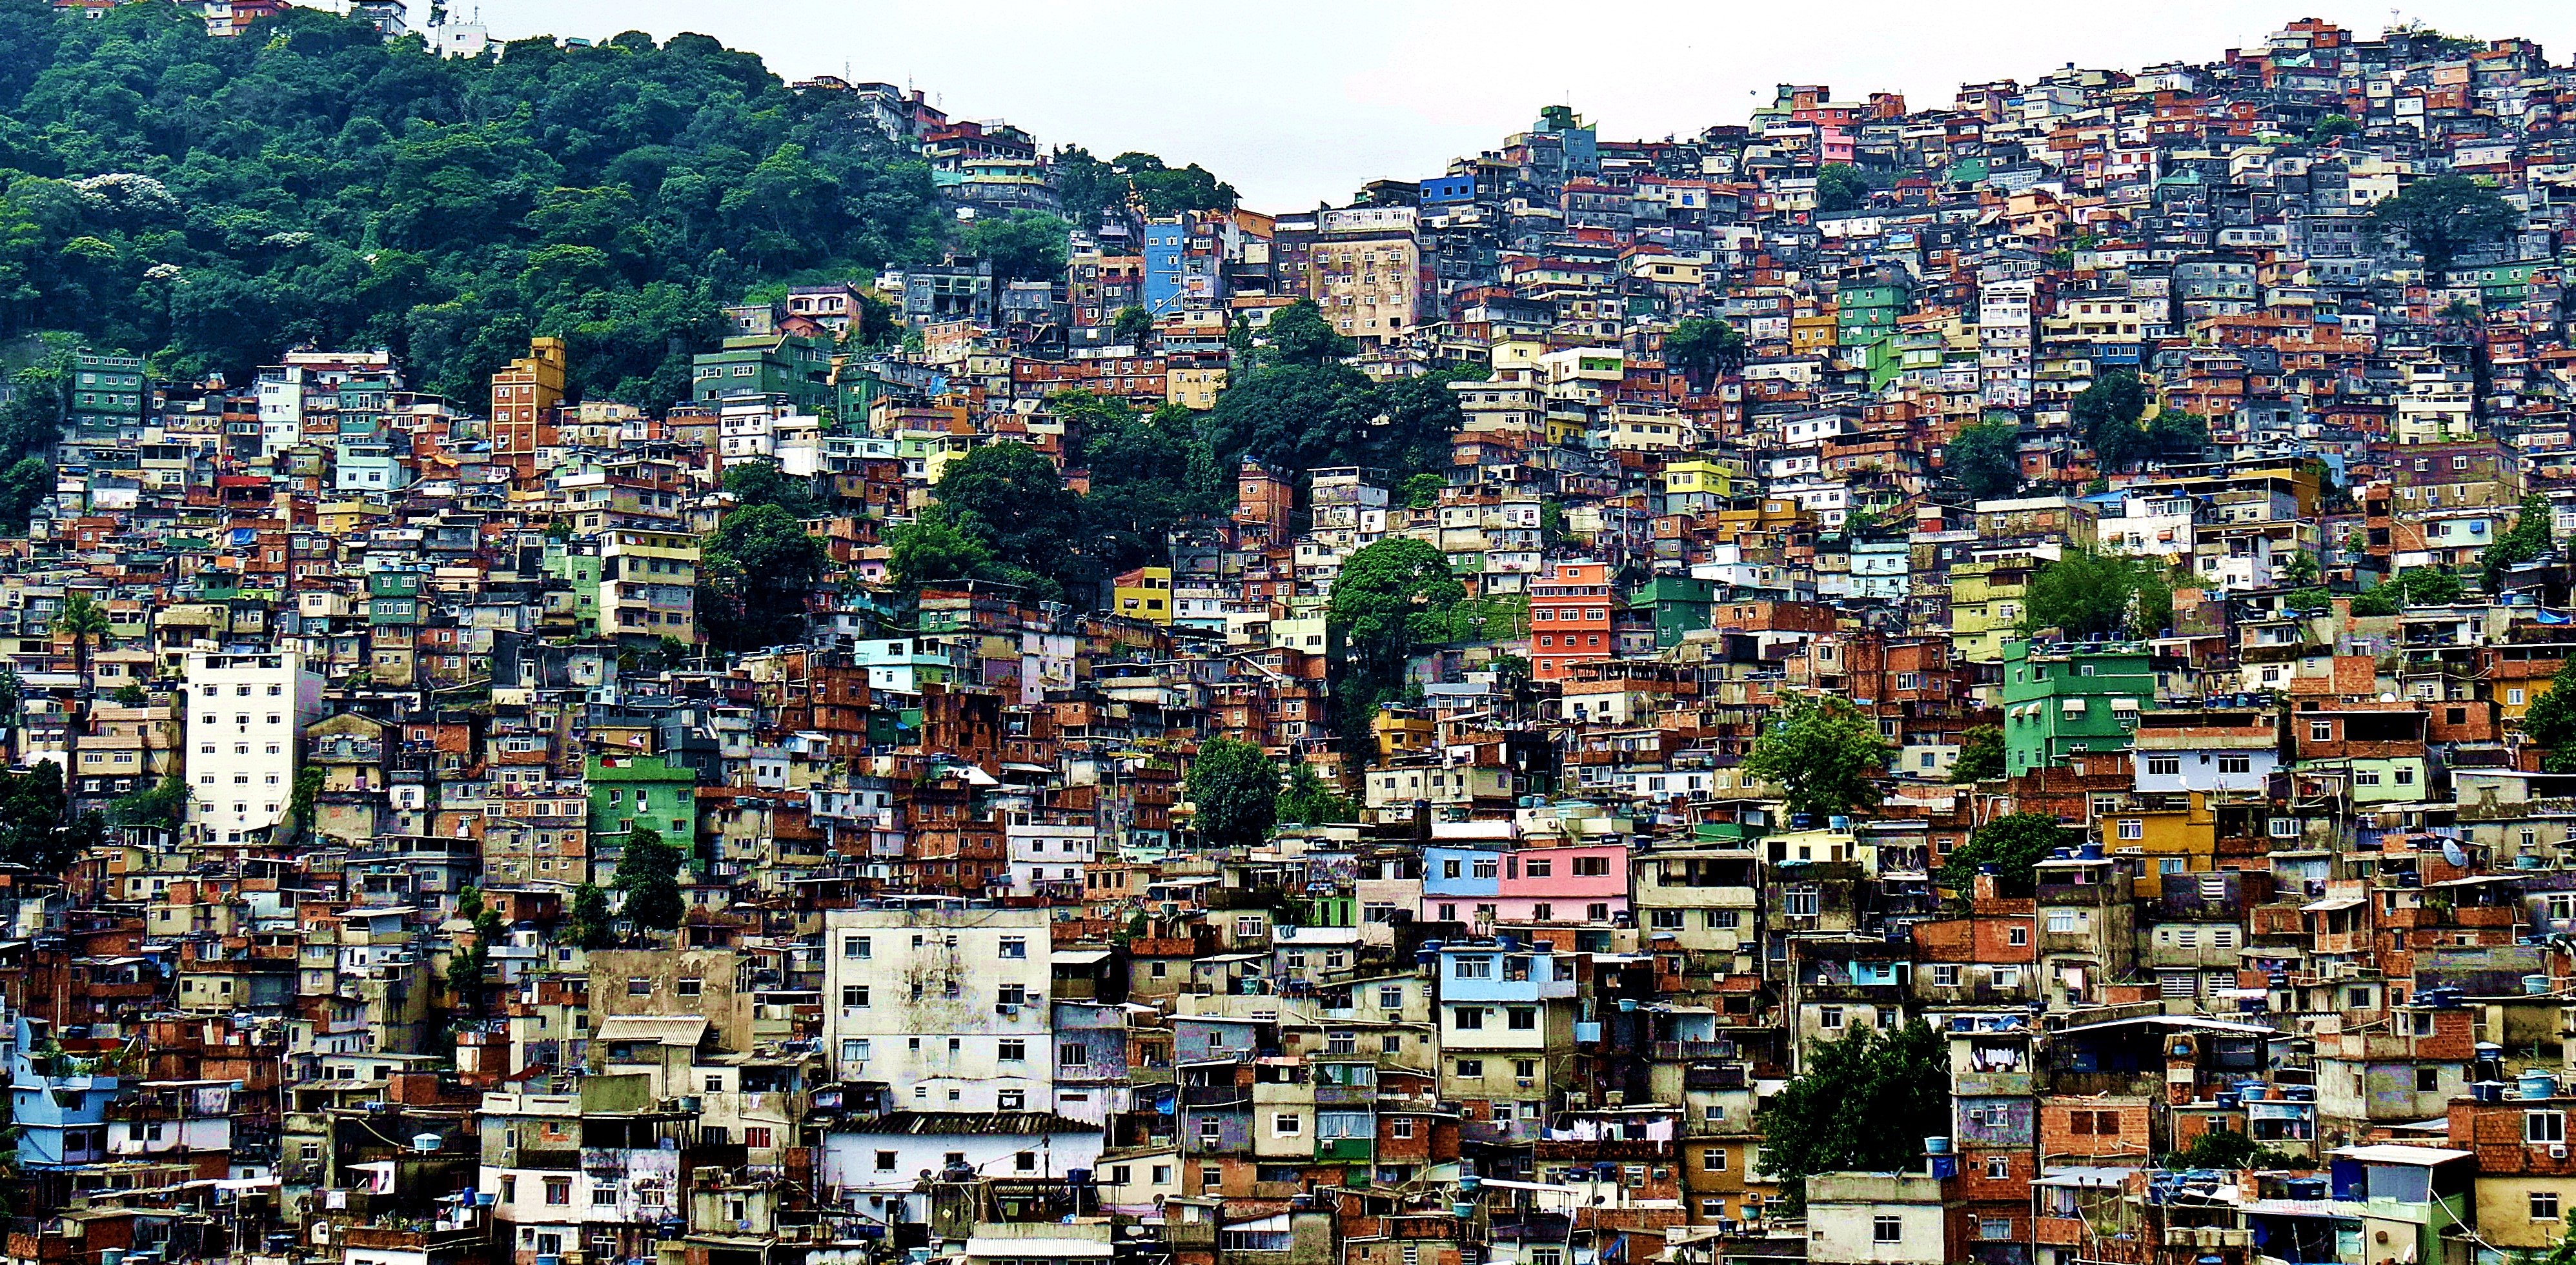 Slums in Favela Brazil HD Wallpaper Background Image 3991x1960